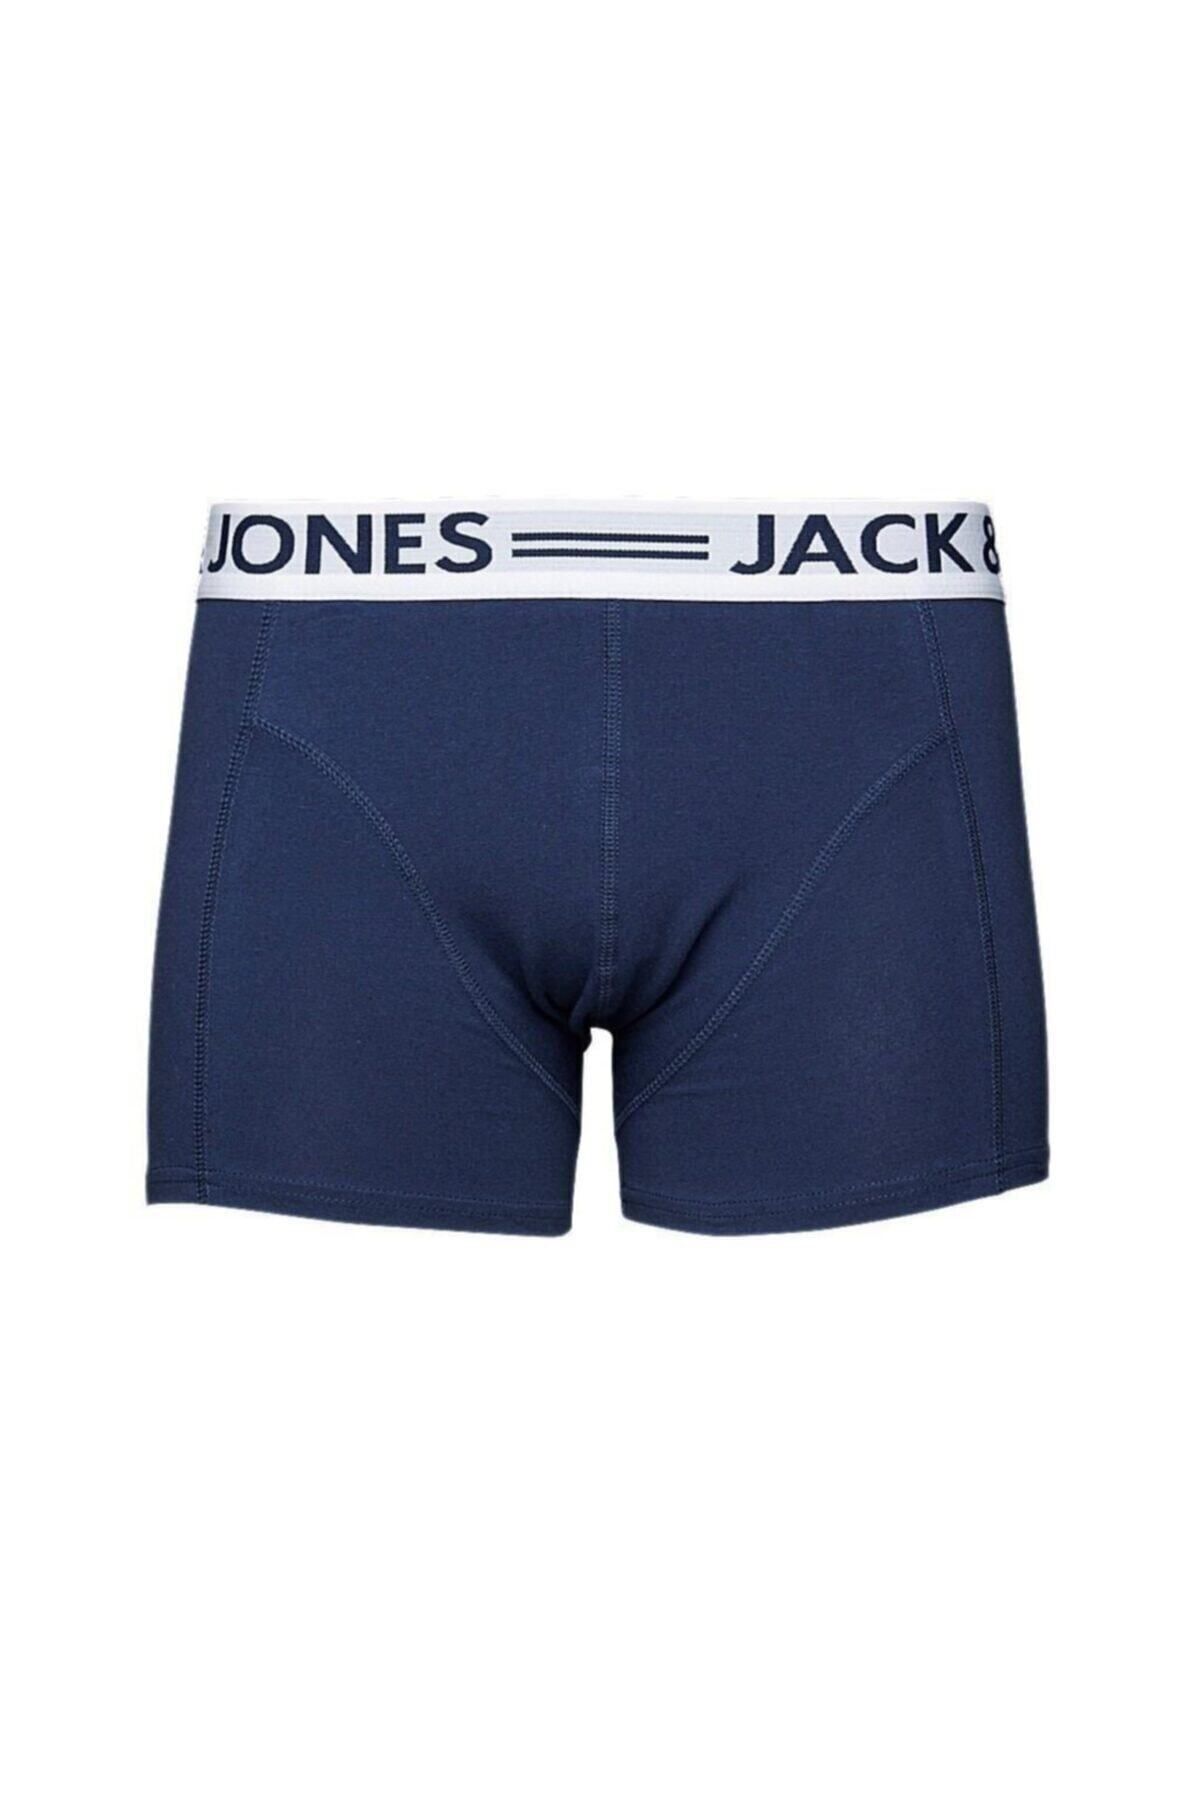 Jack & Jones Jack&jones Jacsense Trunks Noos Erkek Boxer-12075392